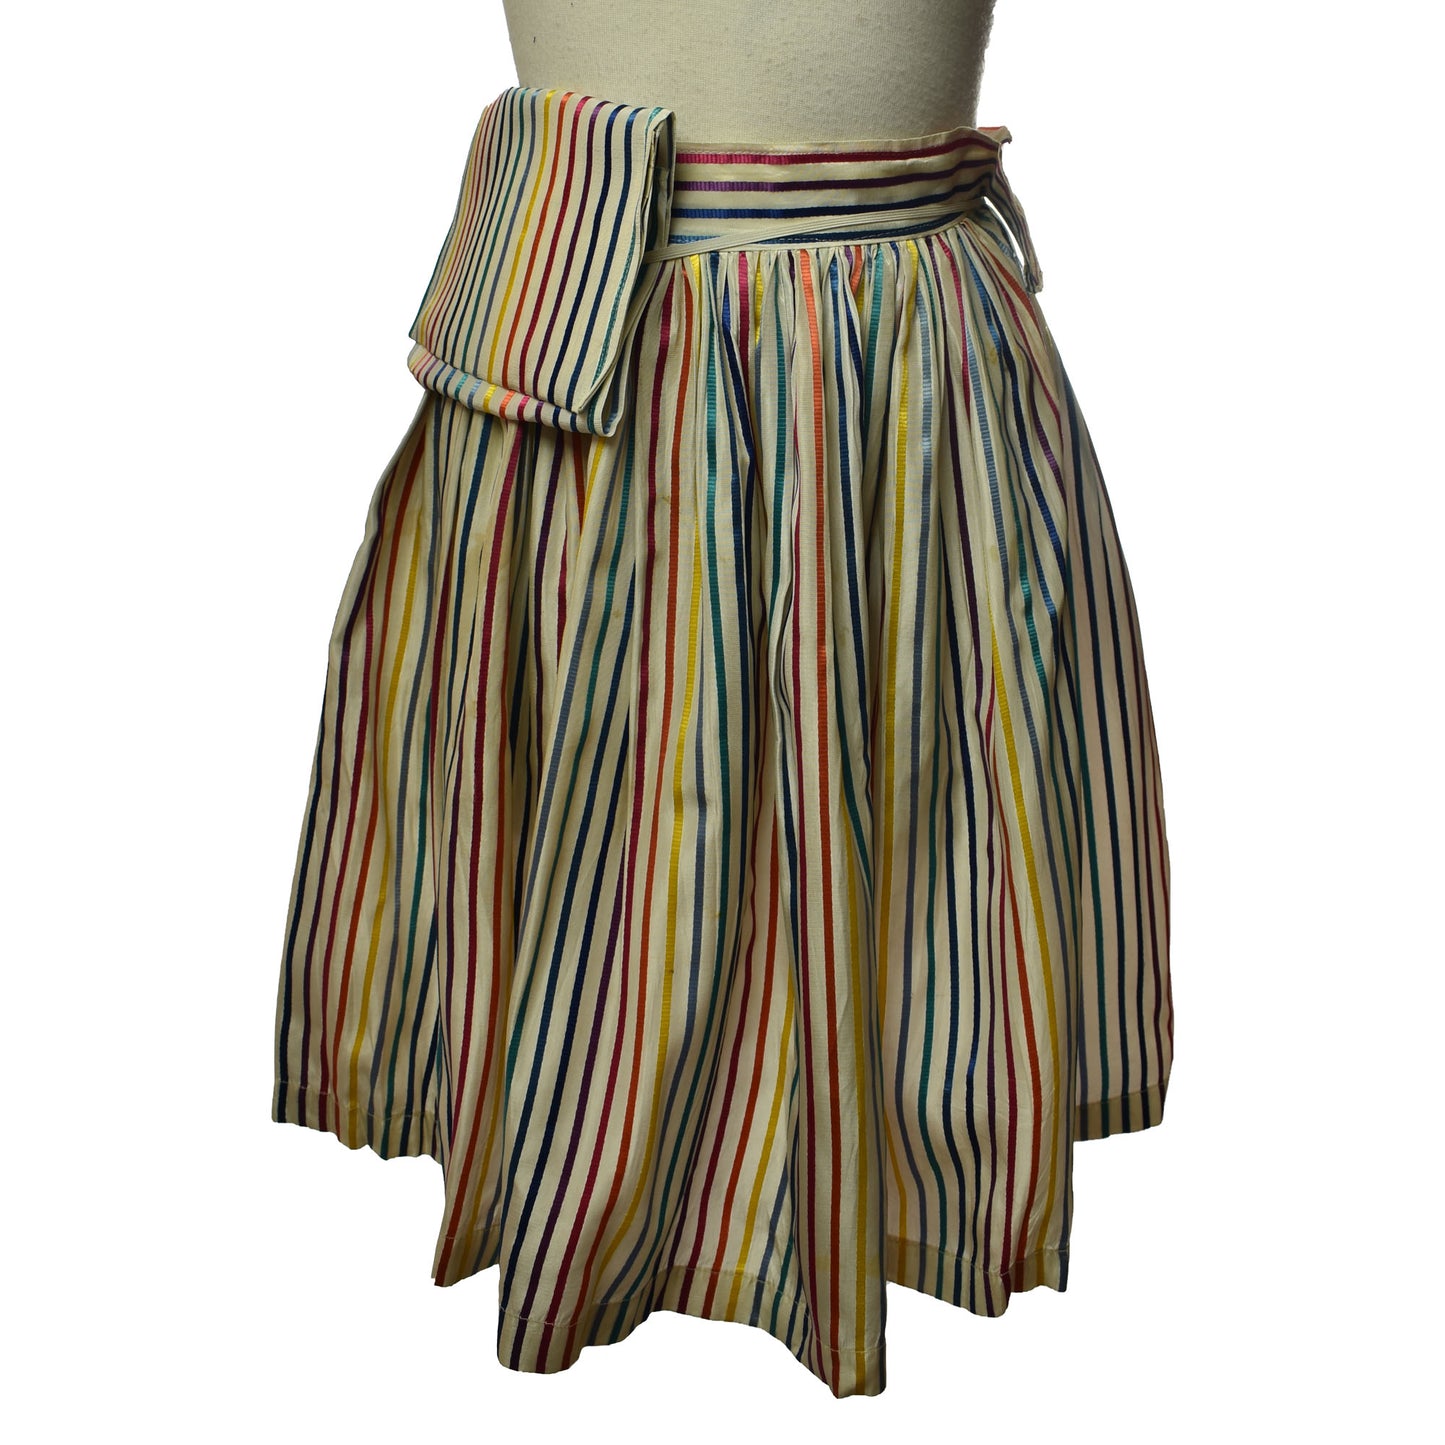 Vintage 1950s Rainbow Striped Taffeta Circle Skirt with Talon Zipper and Folded Waistband Pocket Bag